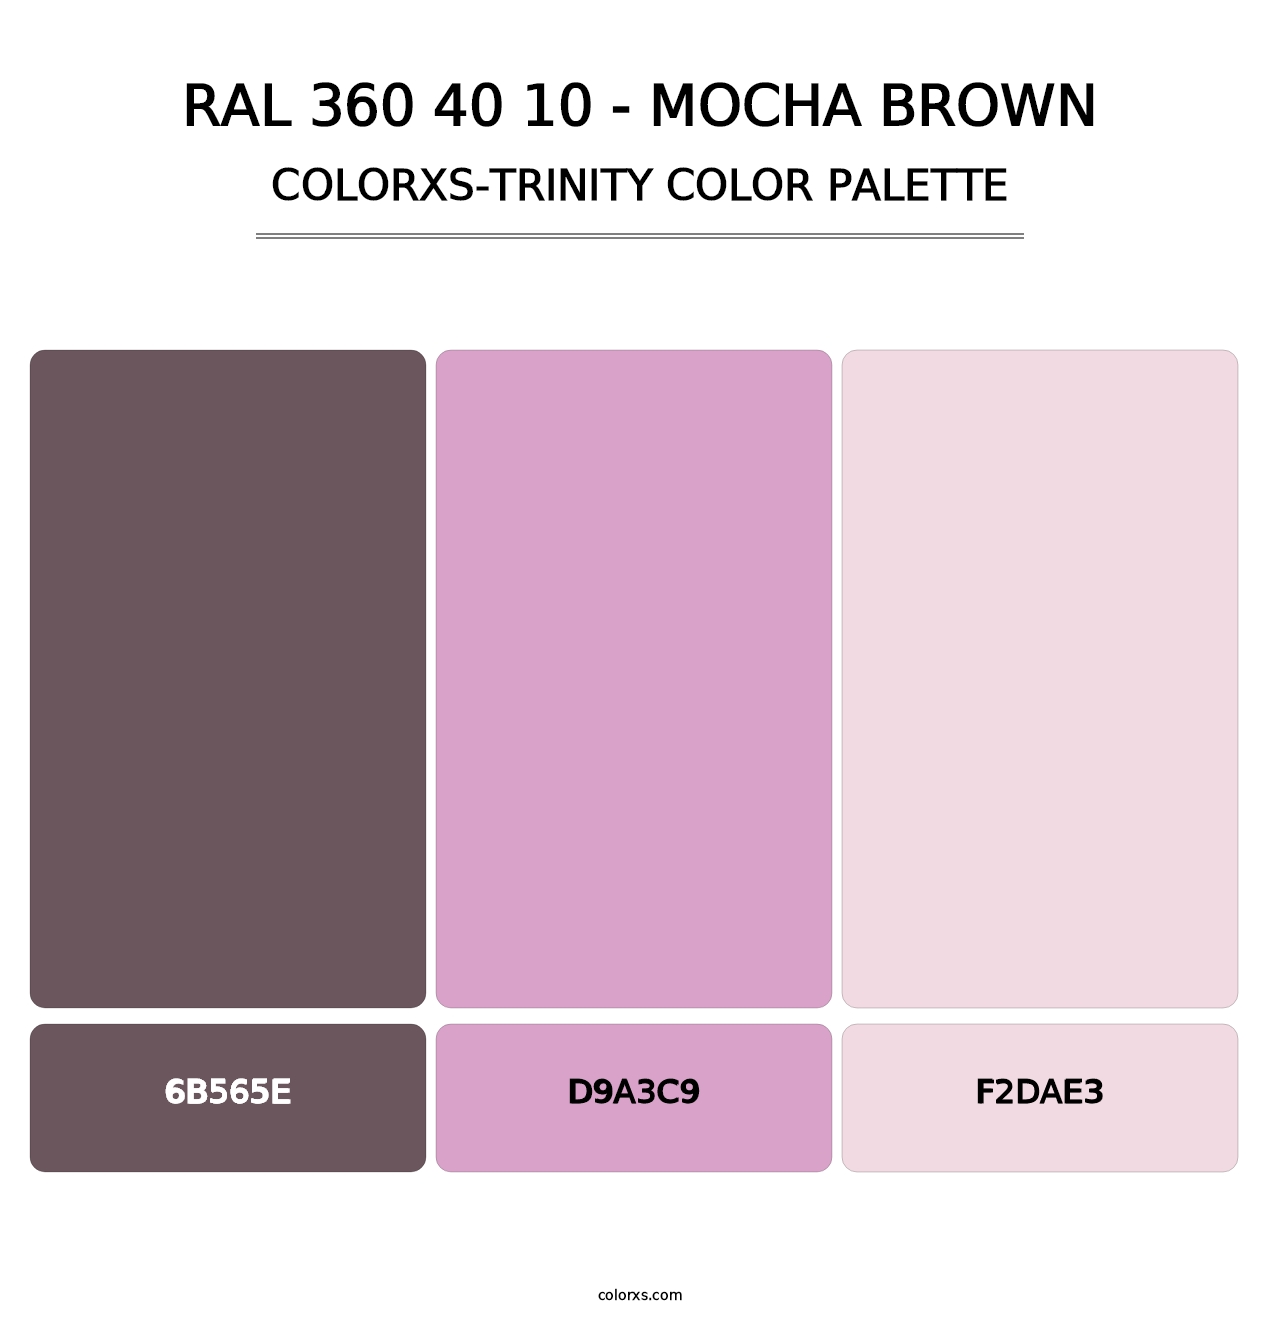 RAL 360 40 10 - Mocha Brown - Colorxs Trinity Palette